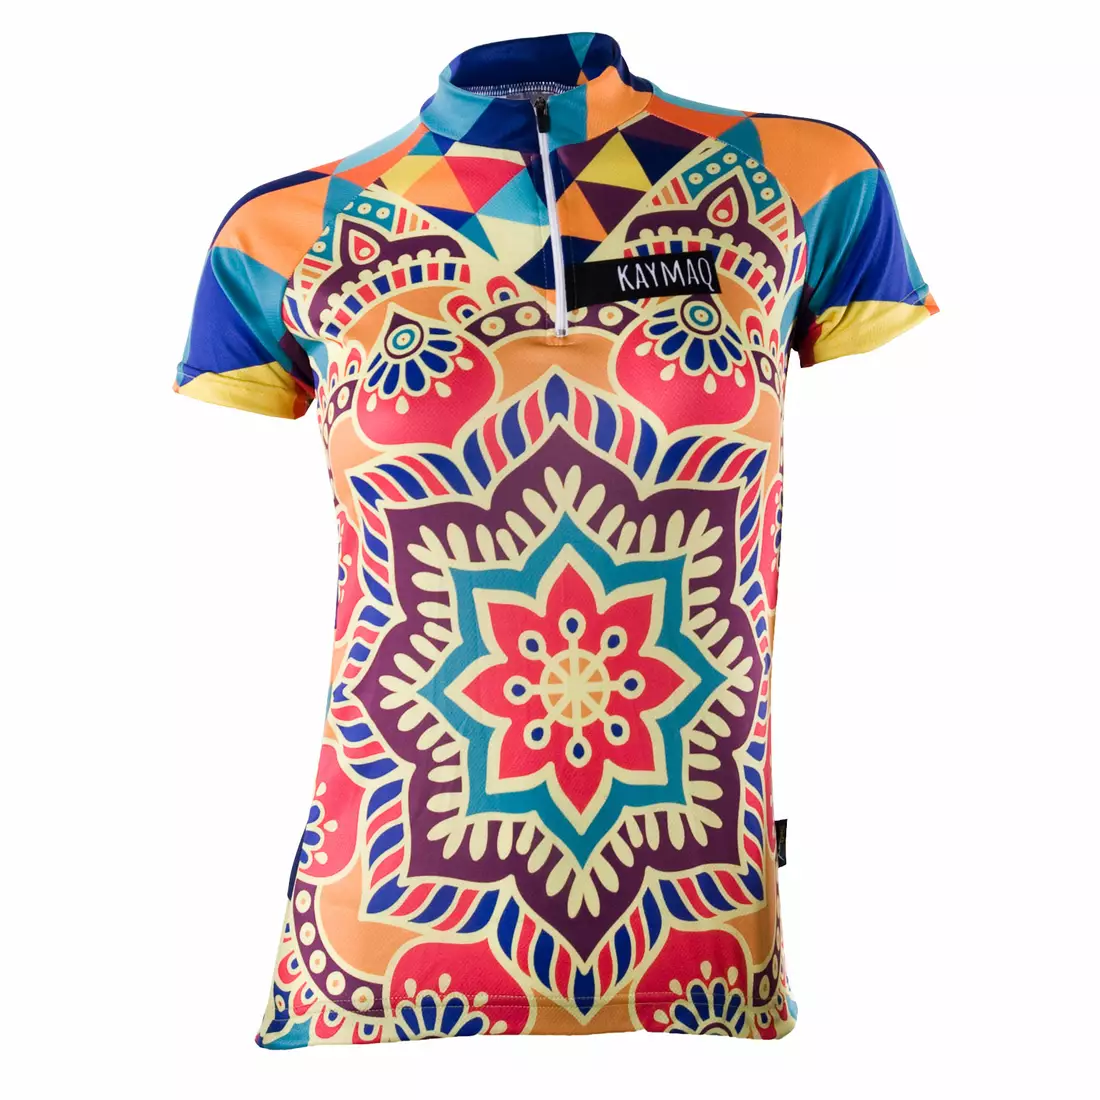 Tricou pentru ciclism pentru femei KAYMAQ MOSAIC